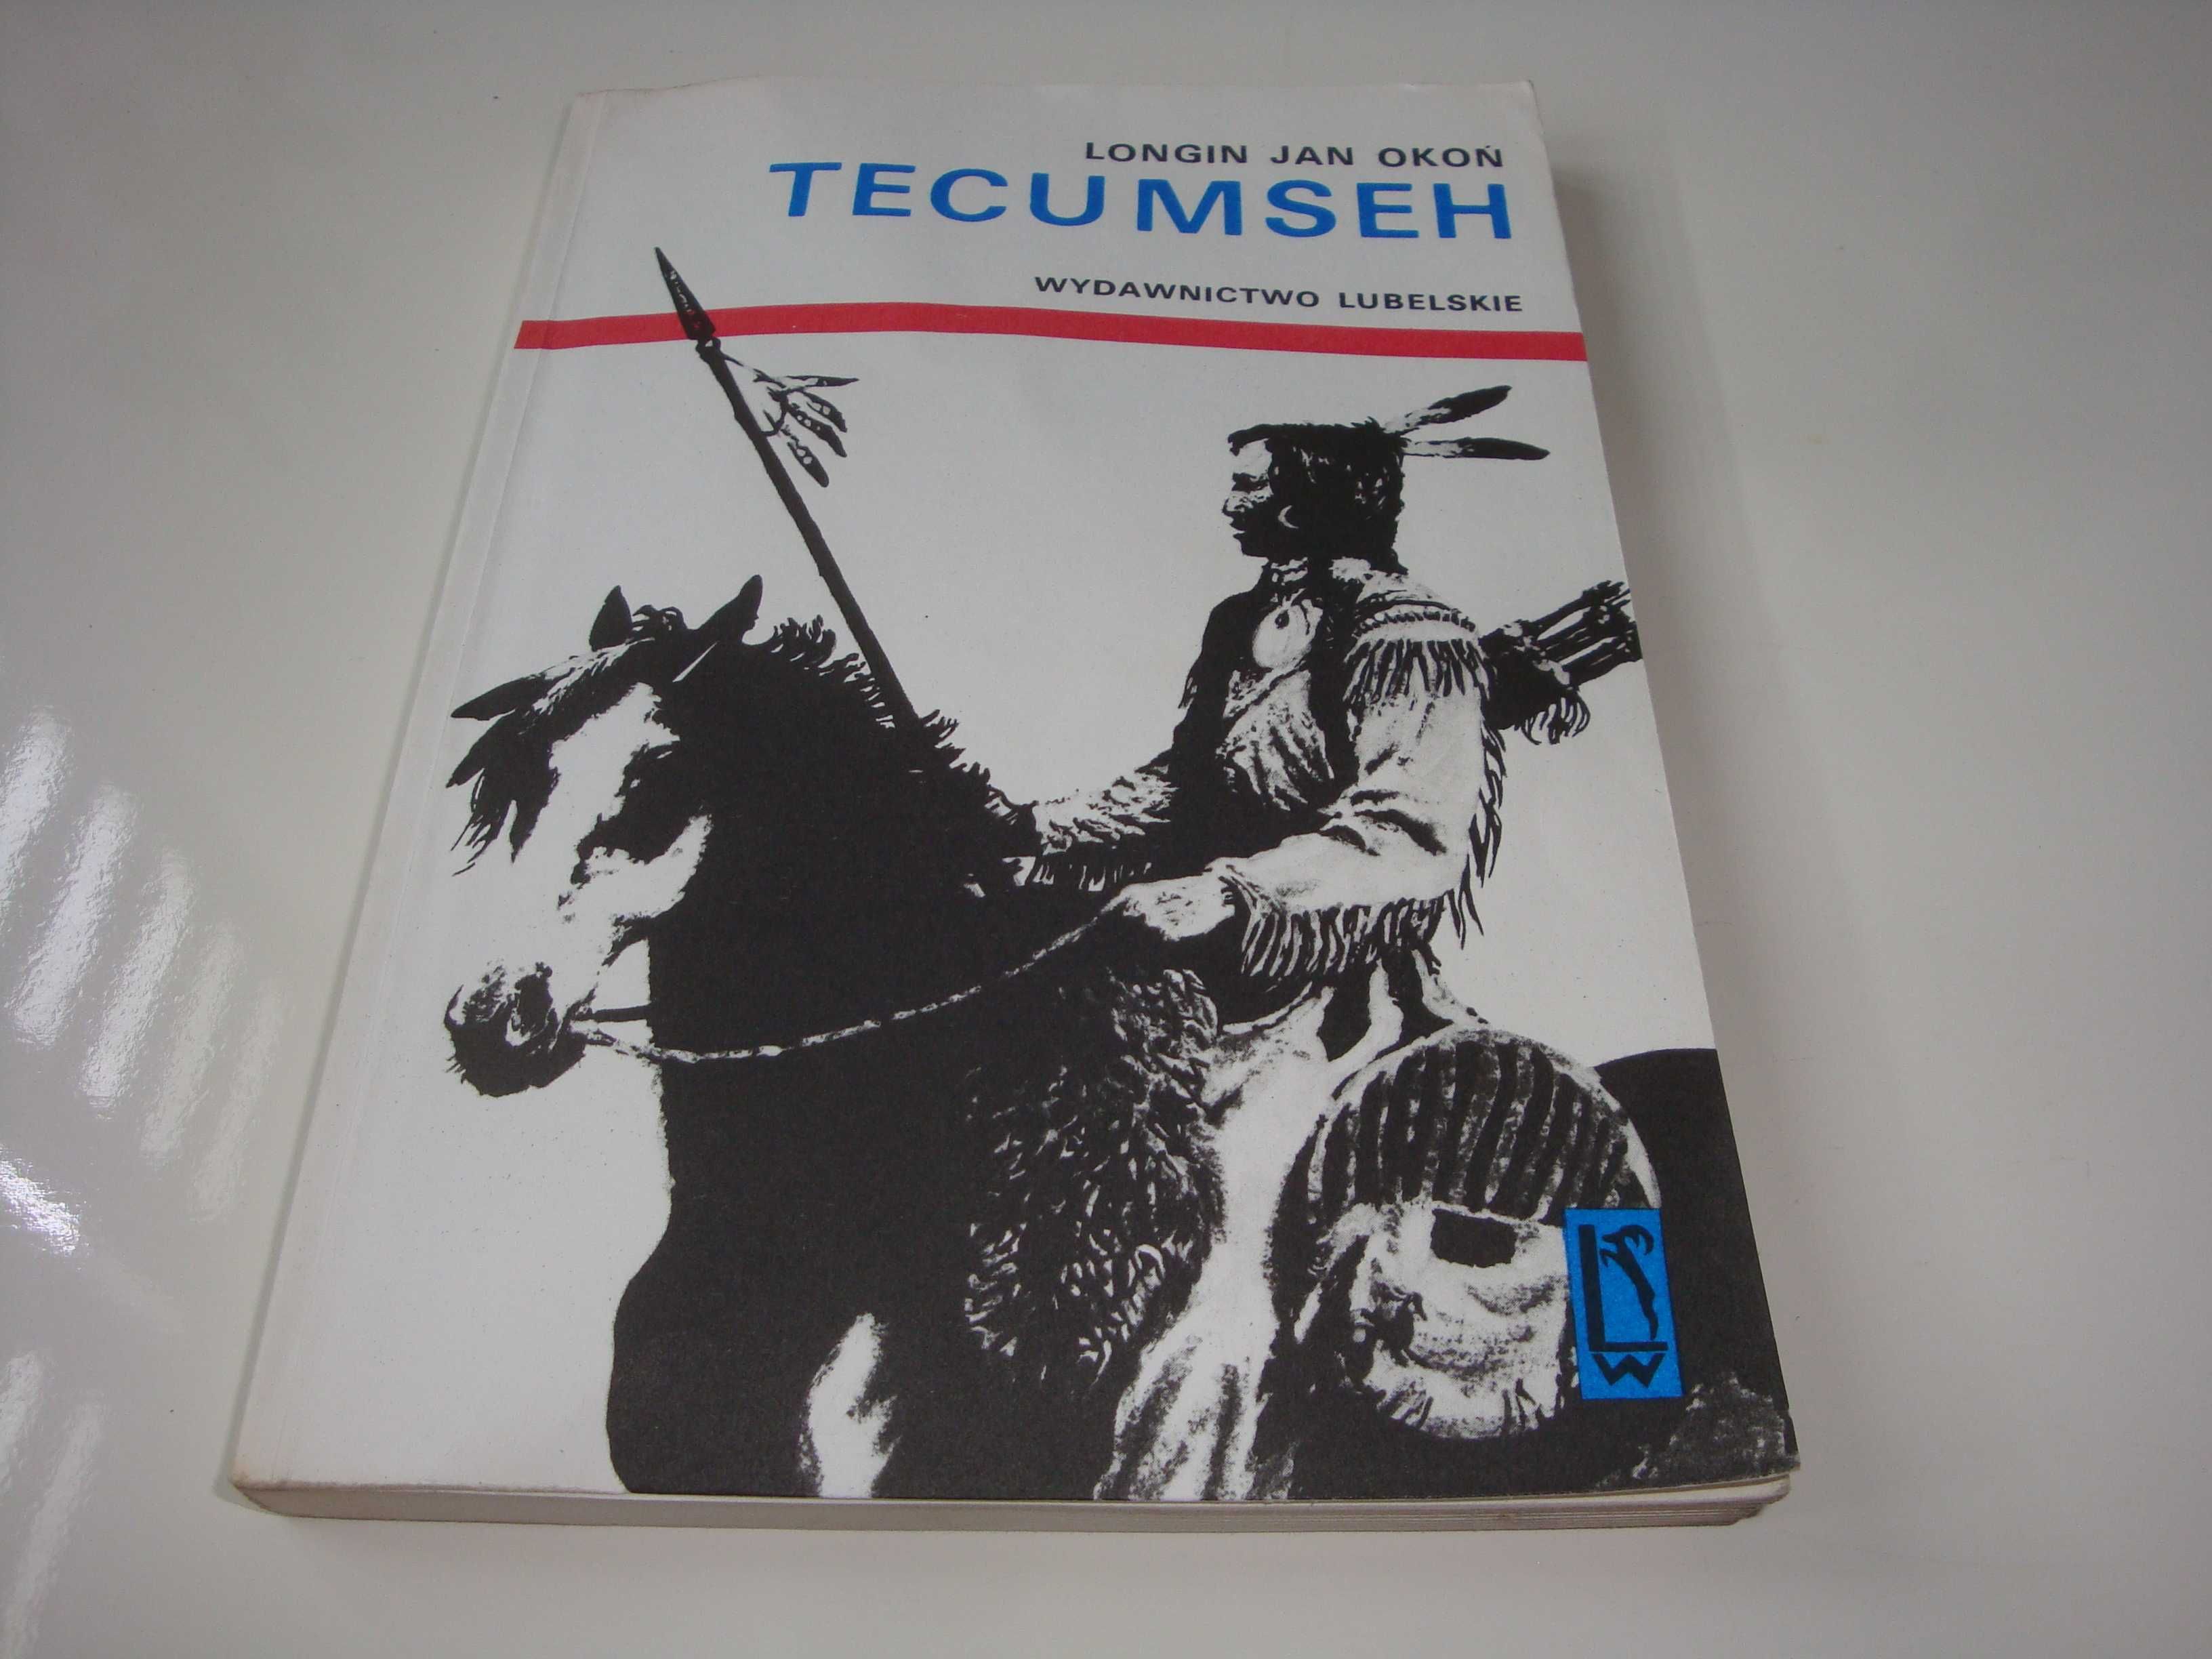 Tecumseh Longin Jan Okoń